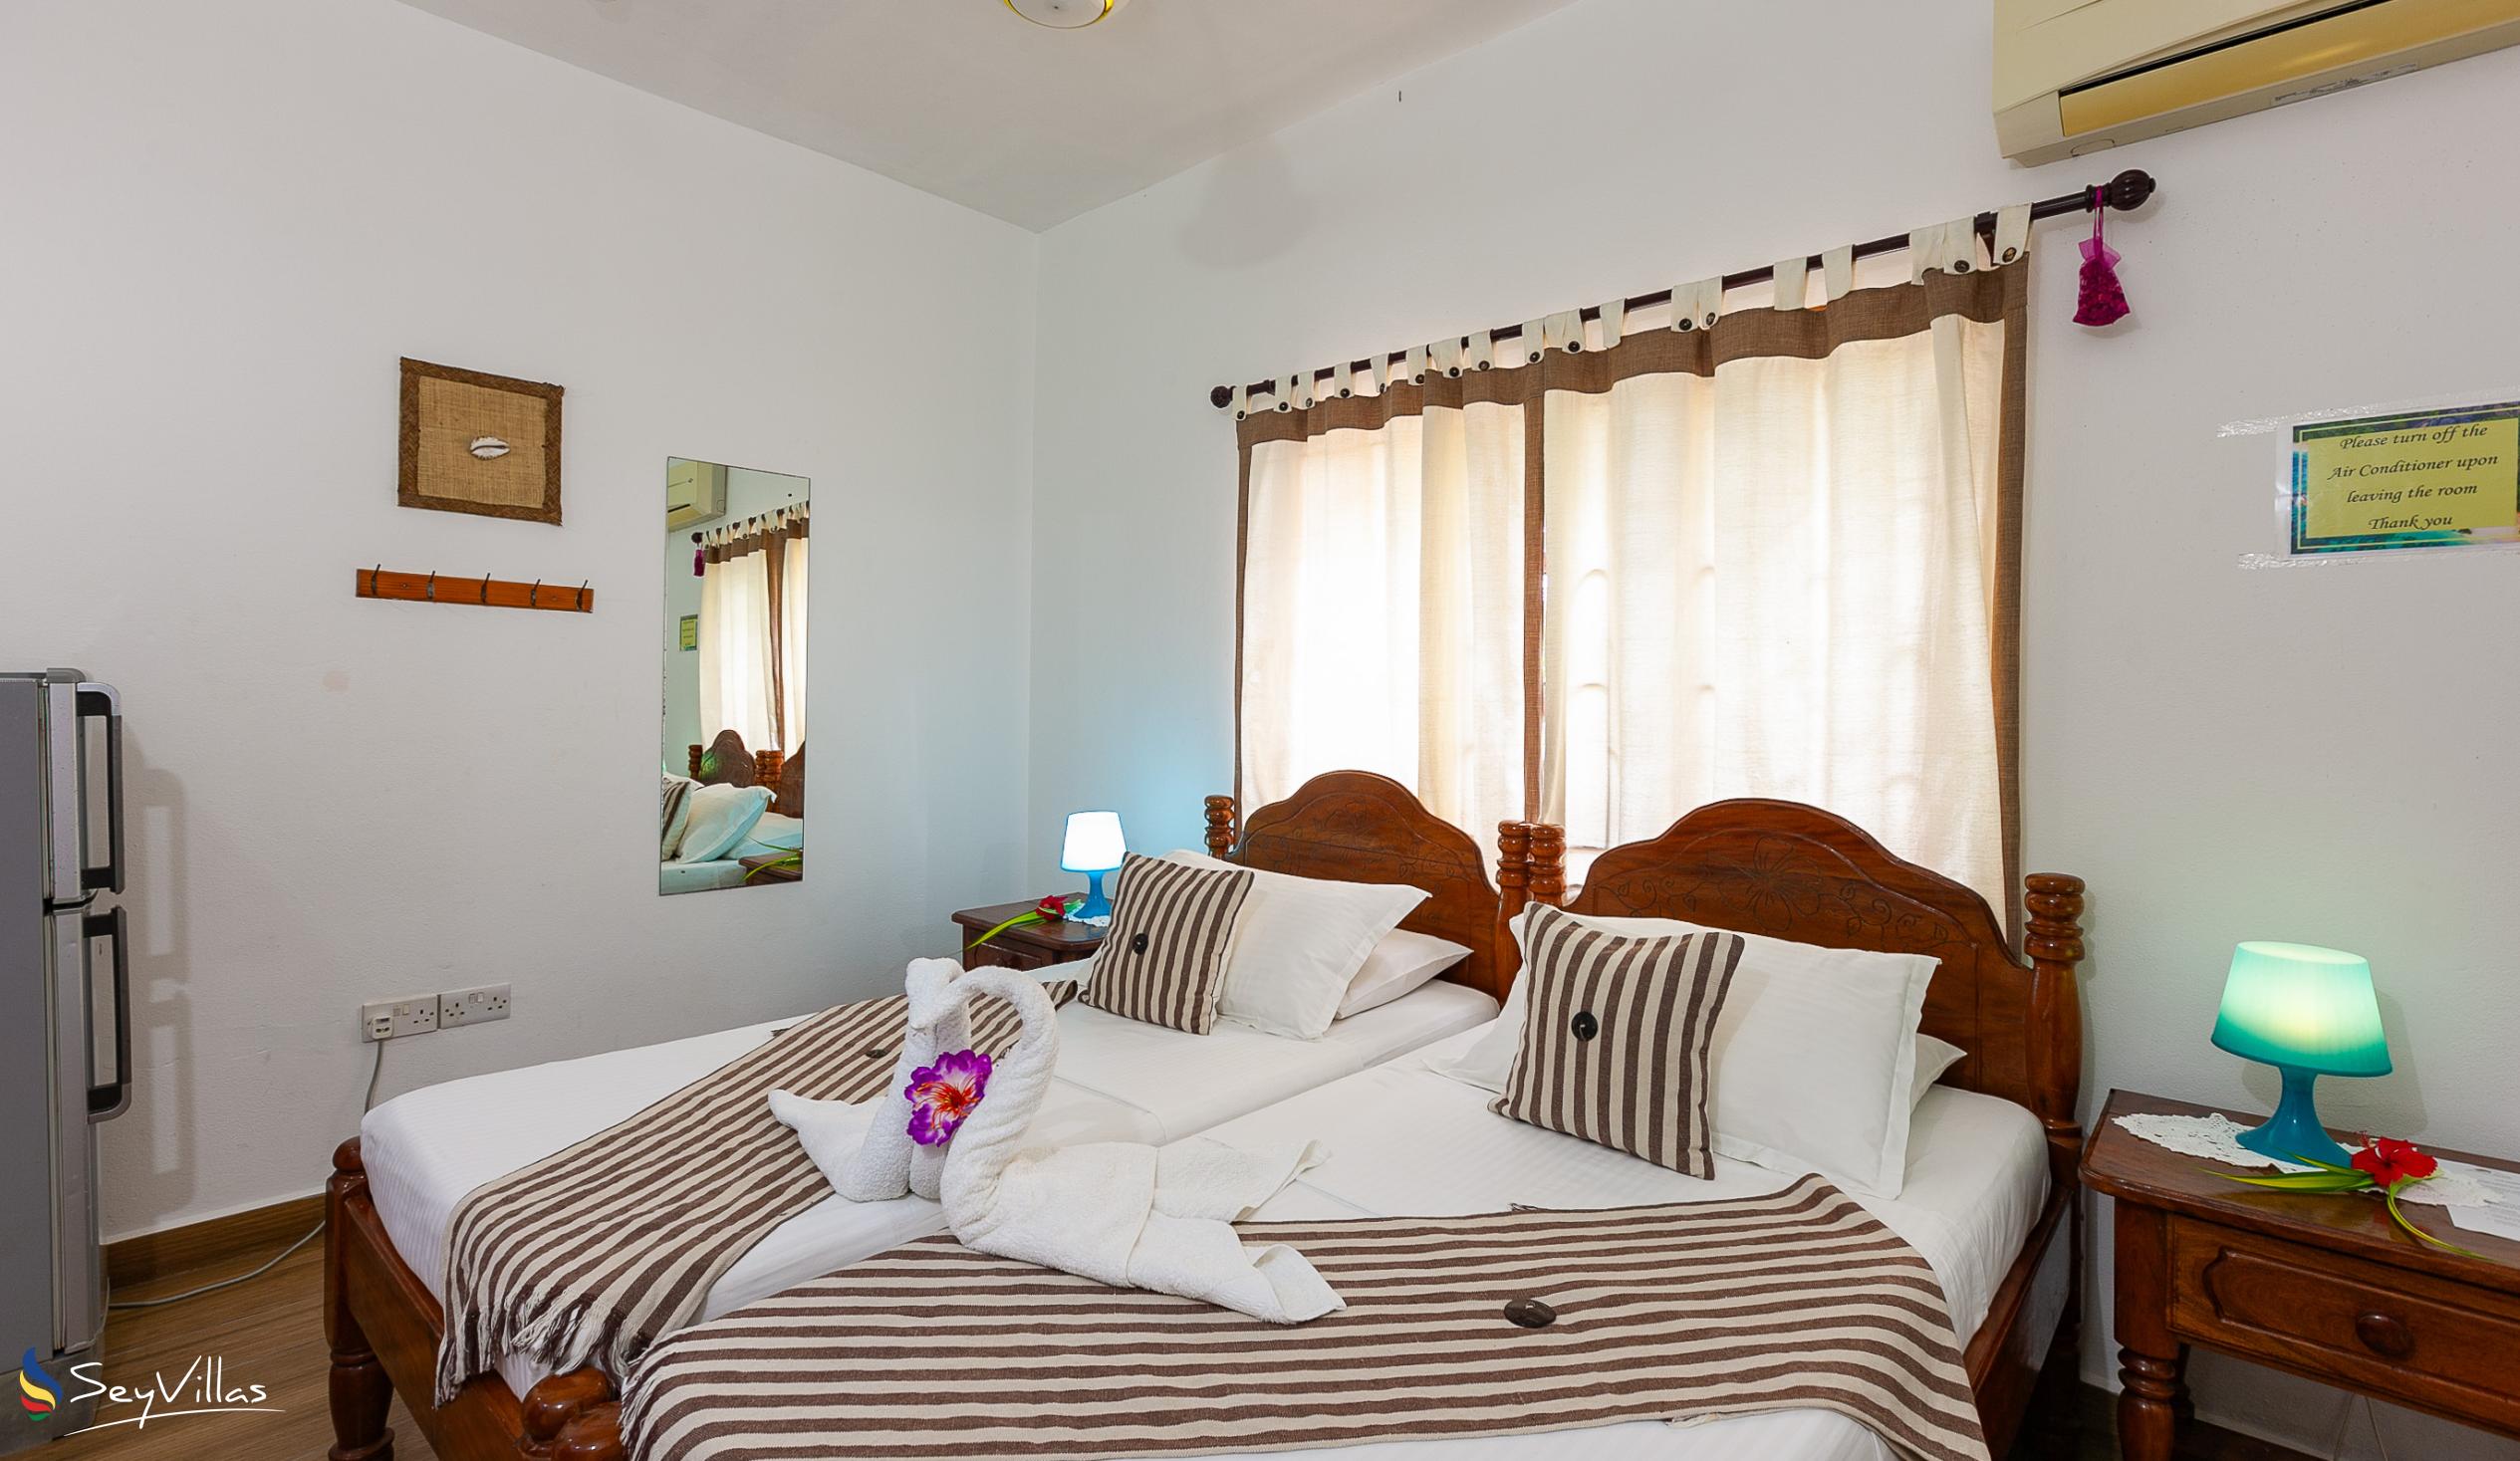 Photo 81: Tannette's Villa - Twin Room - La Digue (Seychelles)